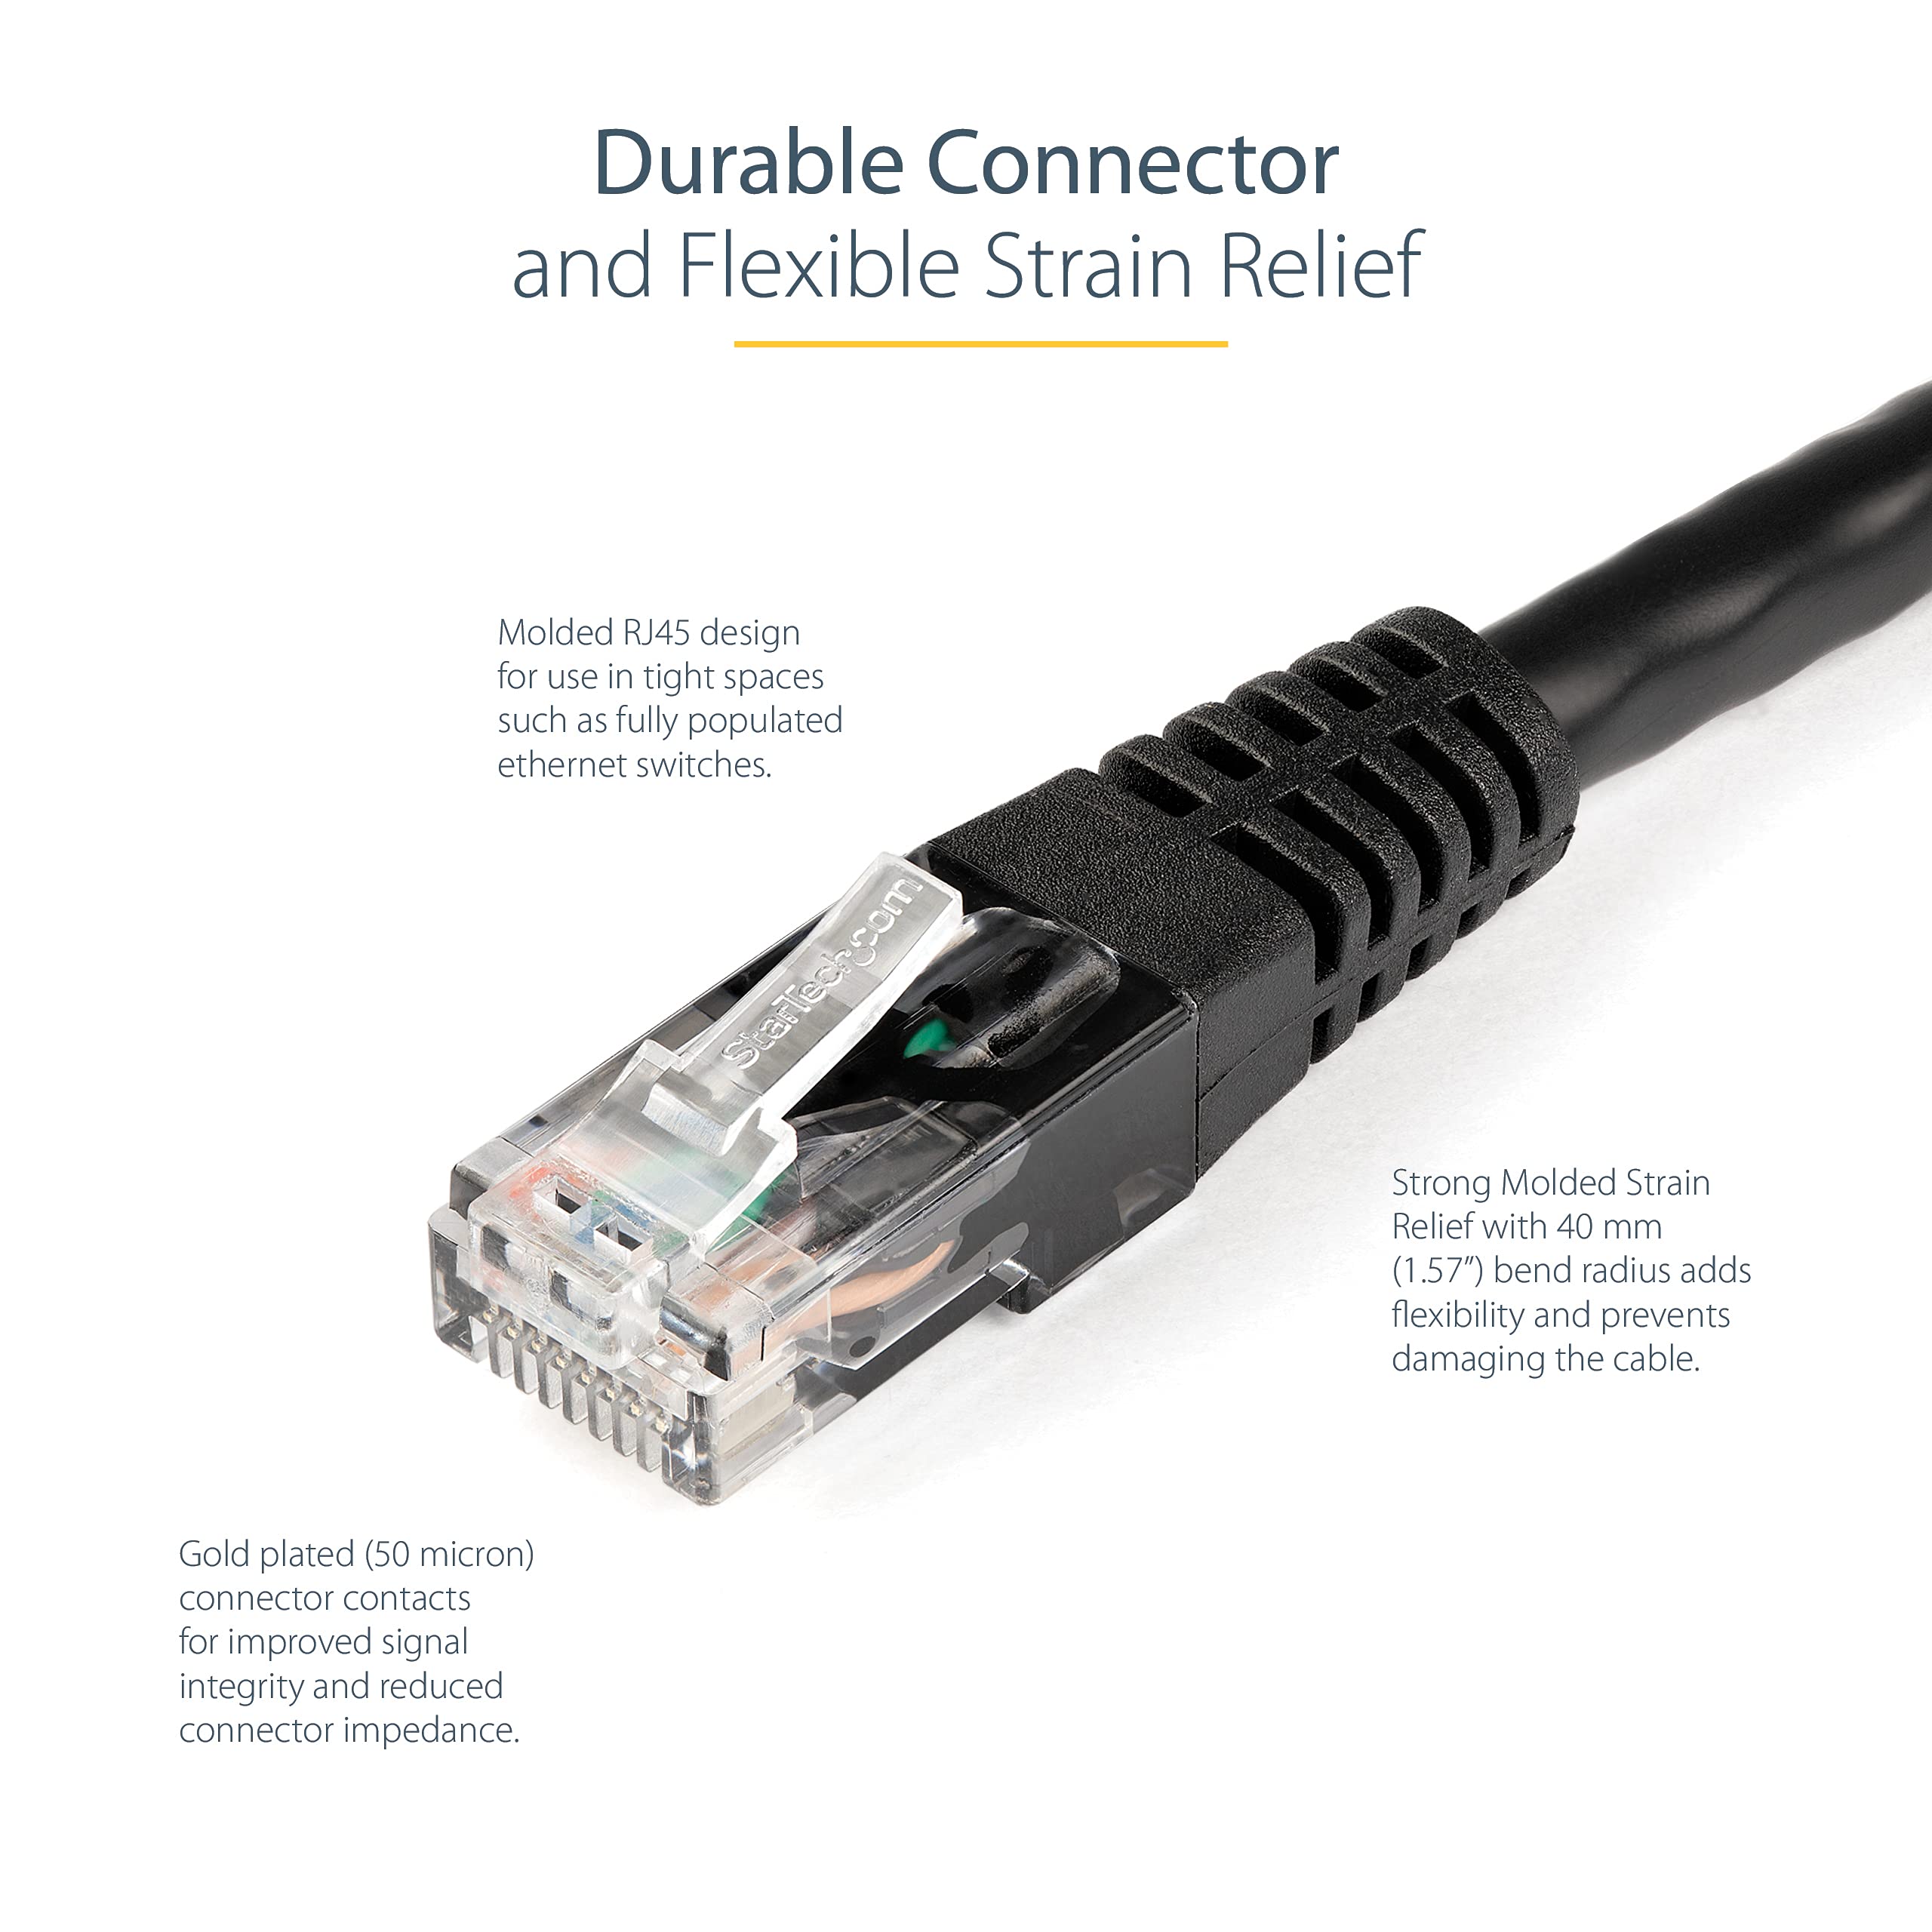 StarTech 100ft CAT6 Ethernet 10Gbps Cable Amazon $16.79 - Black CAT 6 Gigabit Ethernet-650MHz 100W PoE++ RJ45 UTP Molded Category 6 Network/Patch Cord Fluke Tested (C6PATCH100BK)